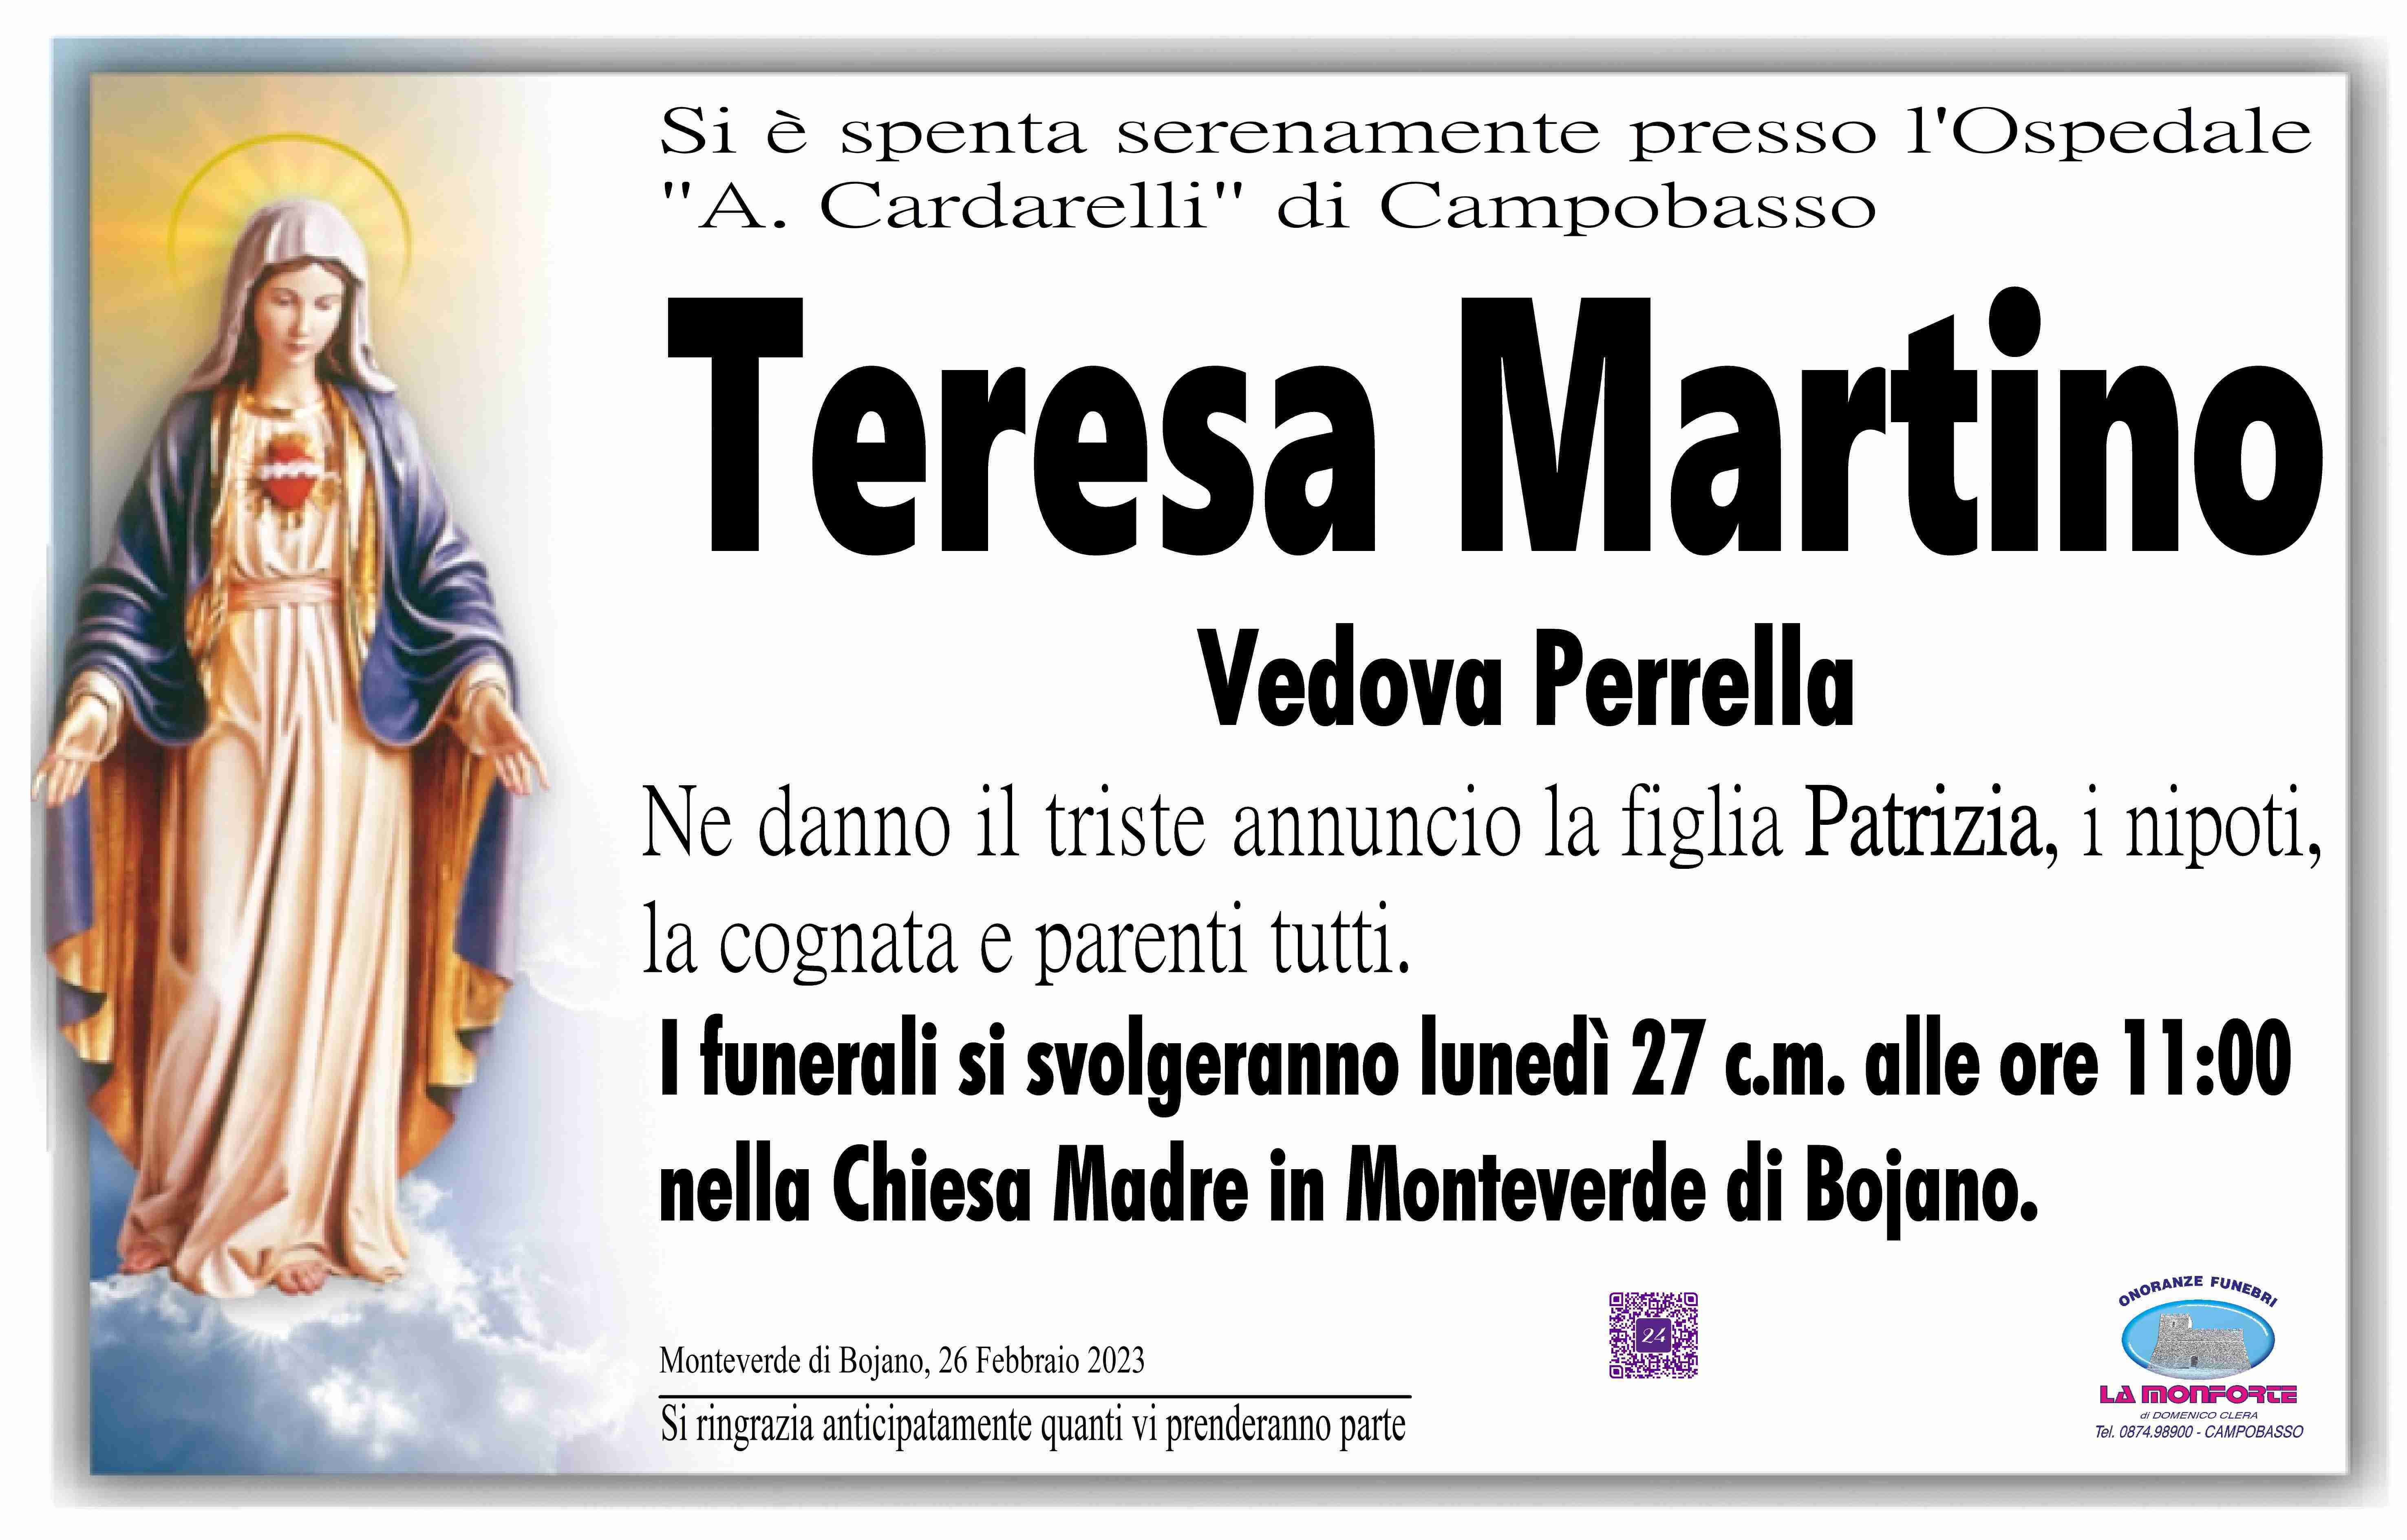 Martino Teresa